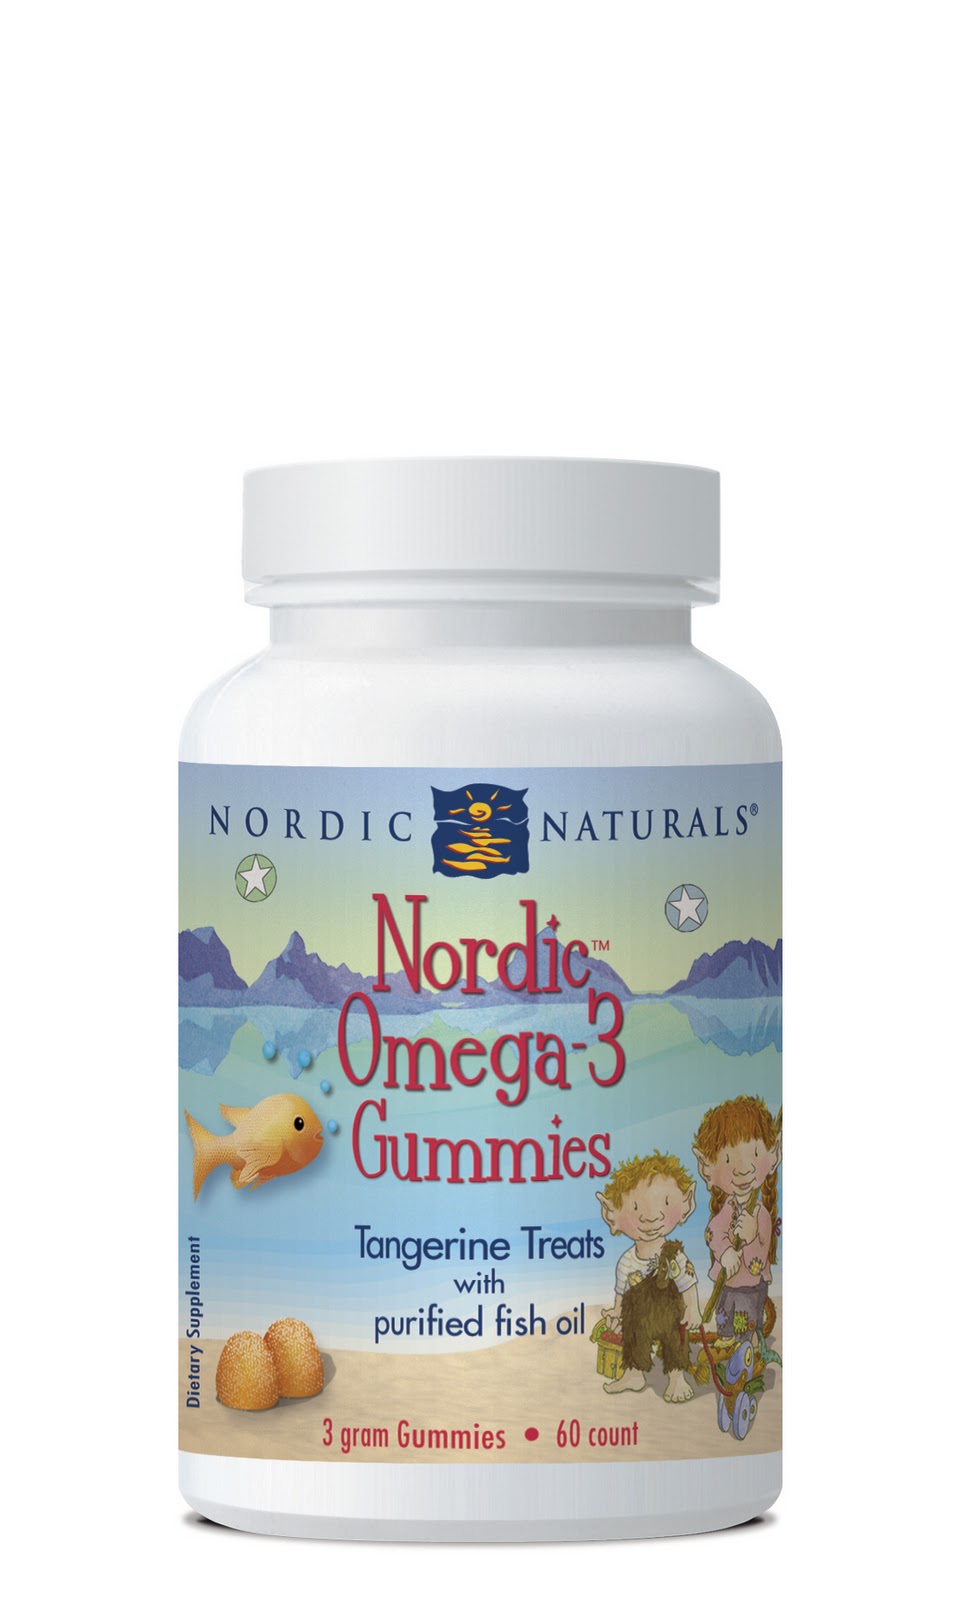 Product: Nordic Omega-3 Gummies